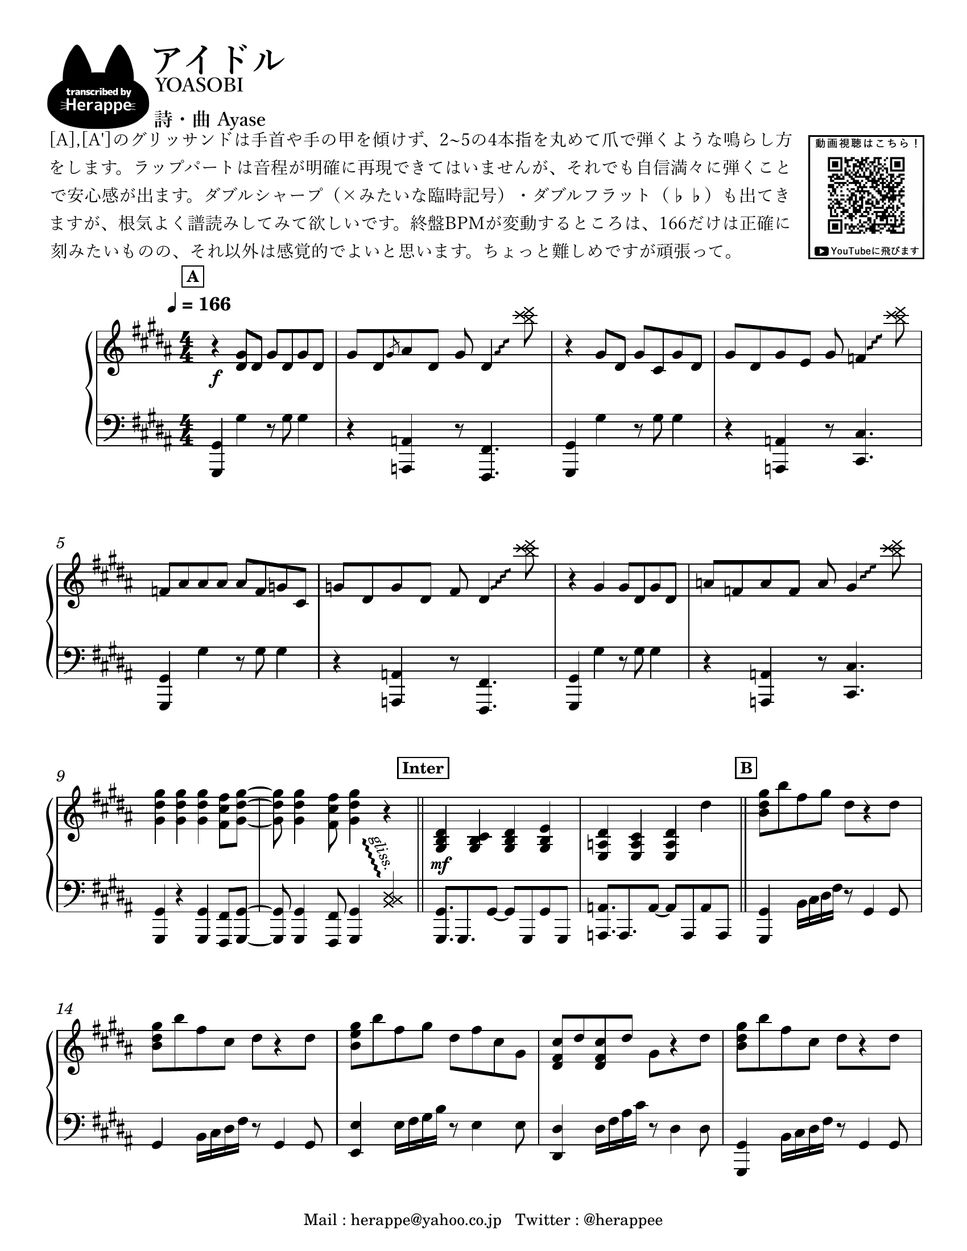 YOASOBI - Idol ("Oshi no Ko" OP Theme) by herappe